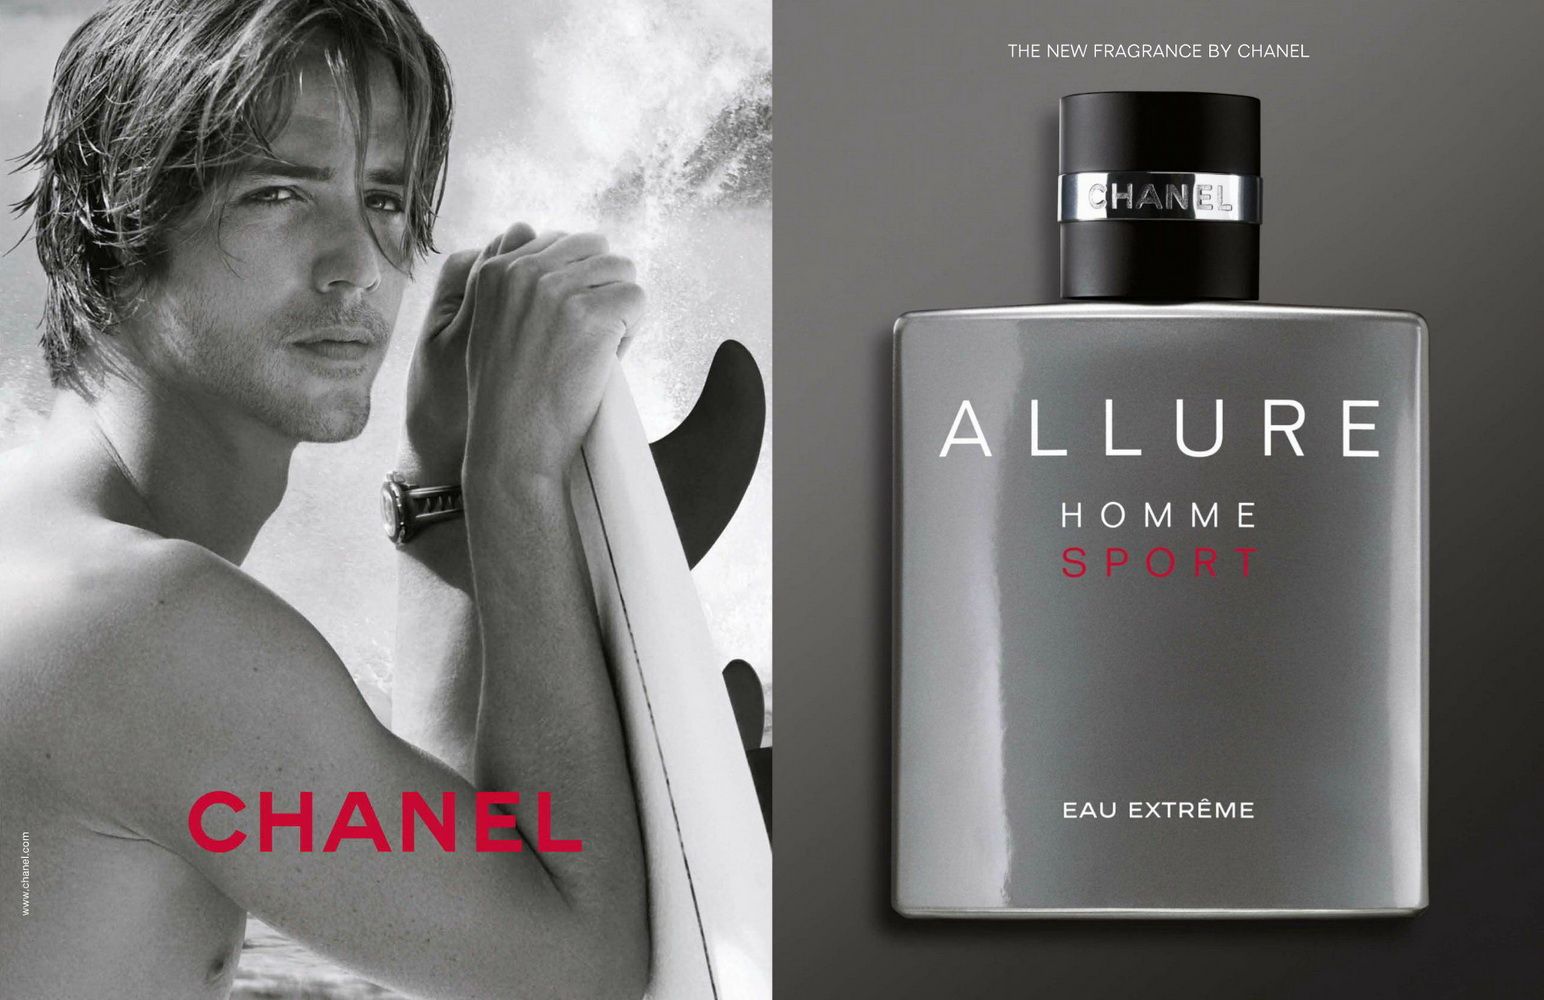 Allure Homme Sport Eau Extreme Chanel for men reklam afiş manken ve sörf tahtası şişe.jpg